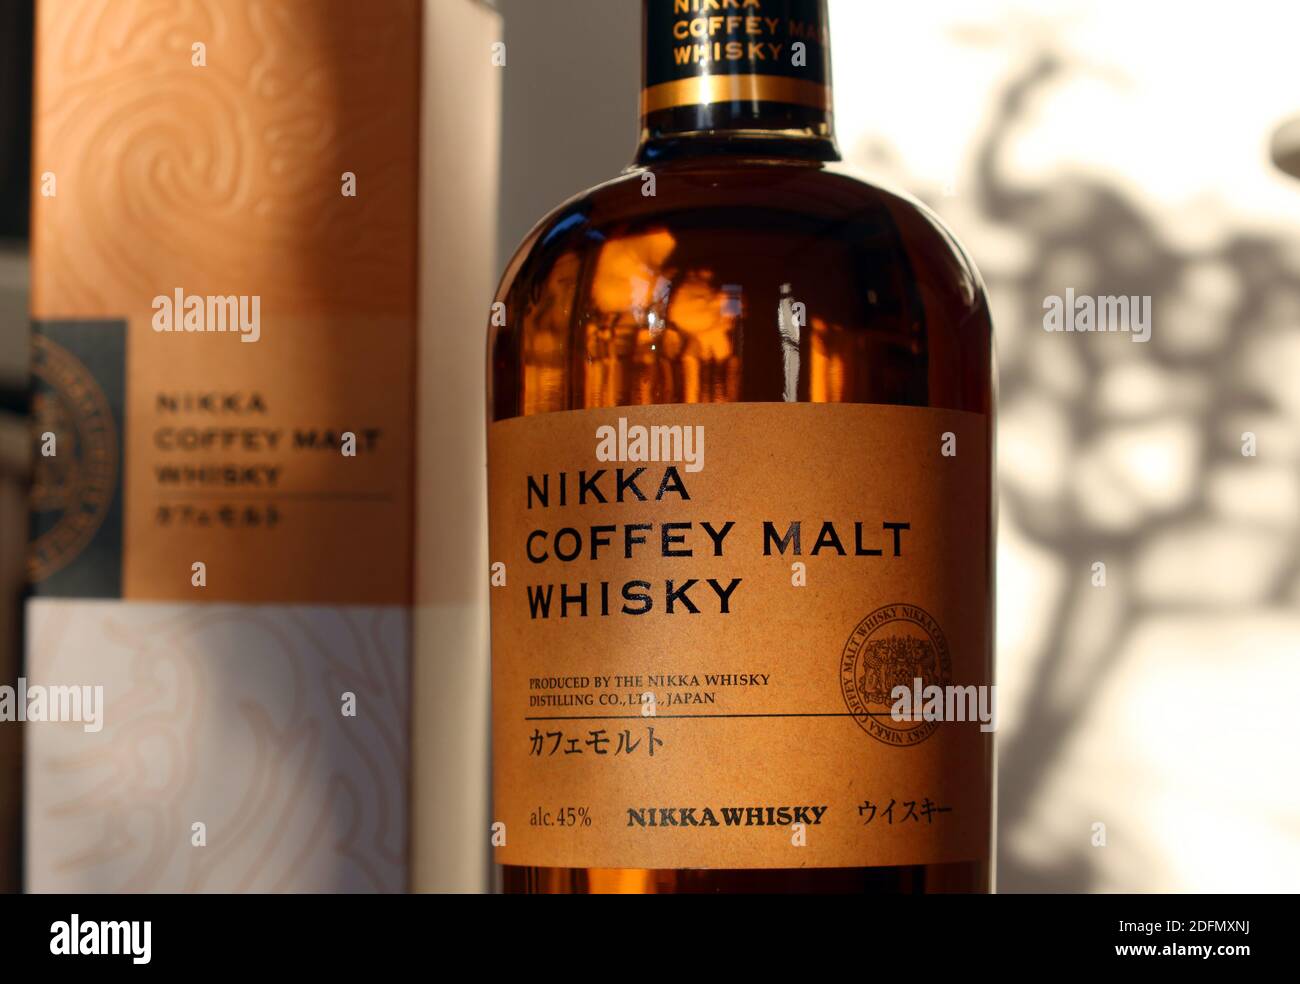 Nikka Whisky Distiling, Nikka Coffey malt Whisky, whisky japonais Banque D'Images